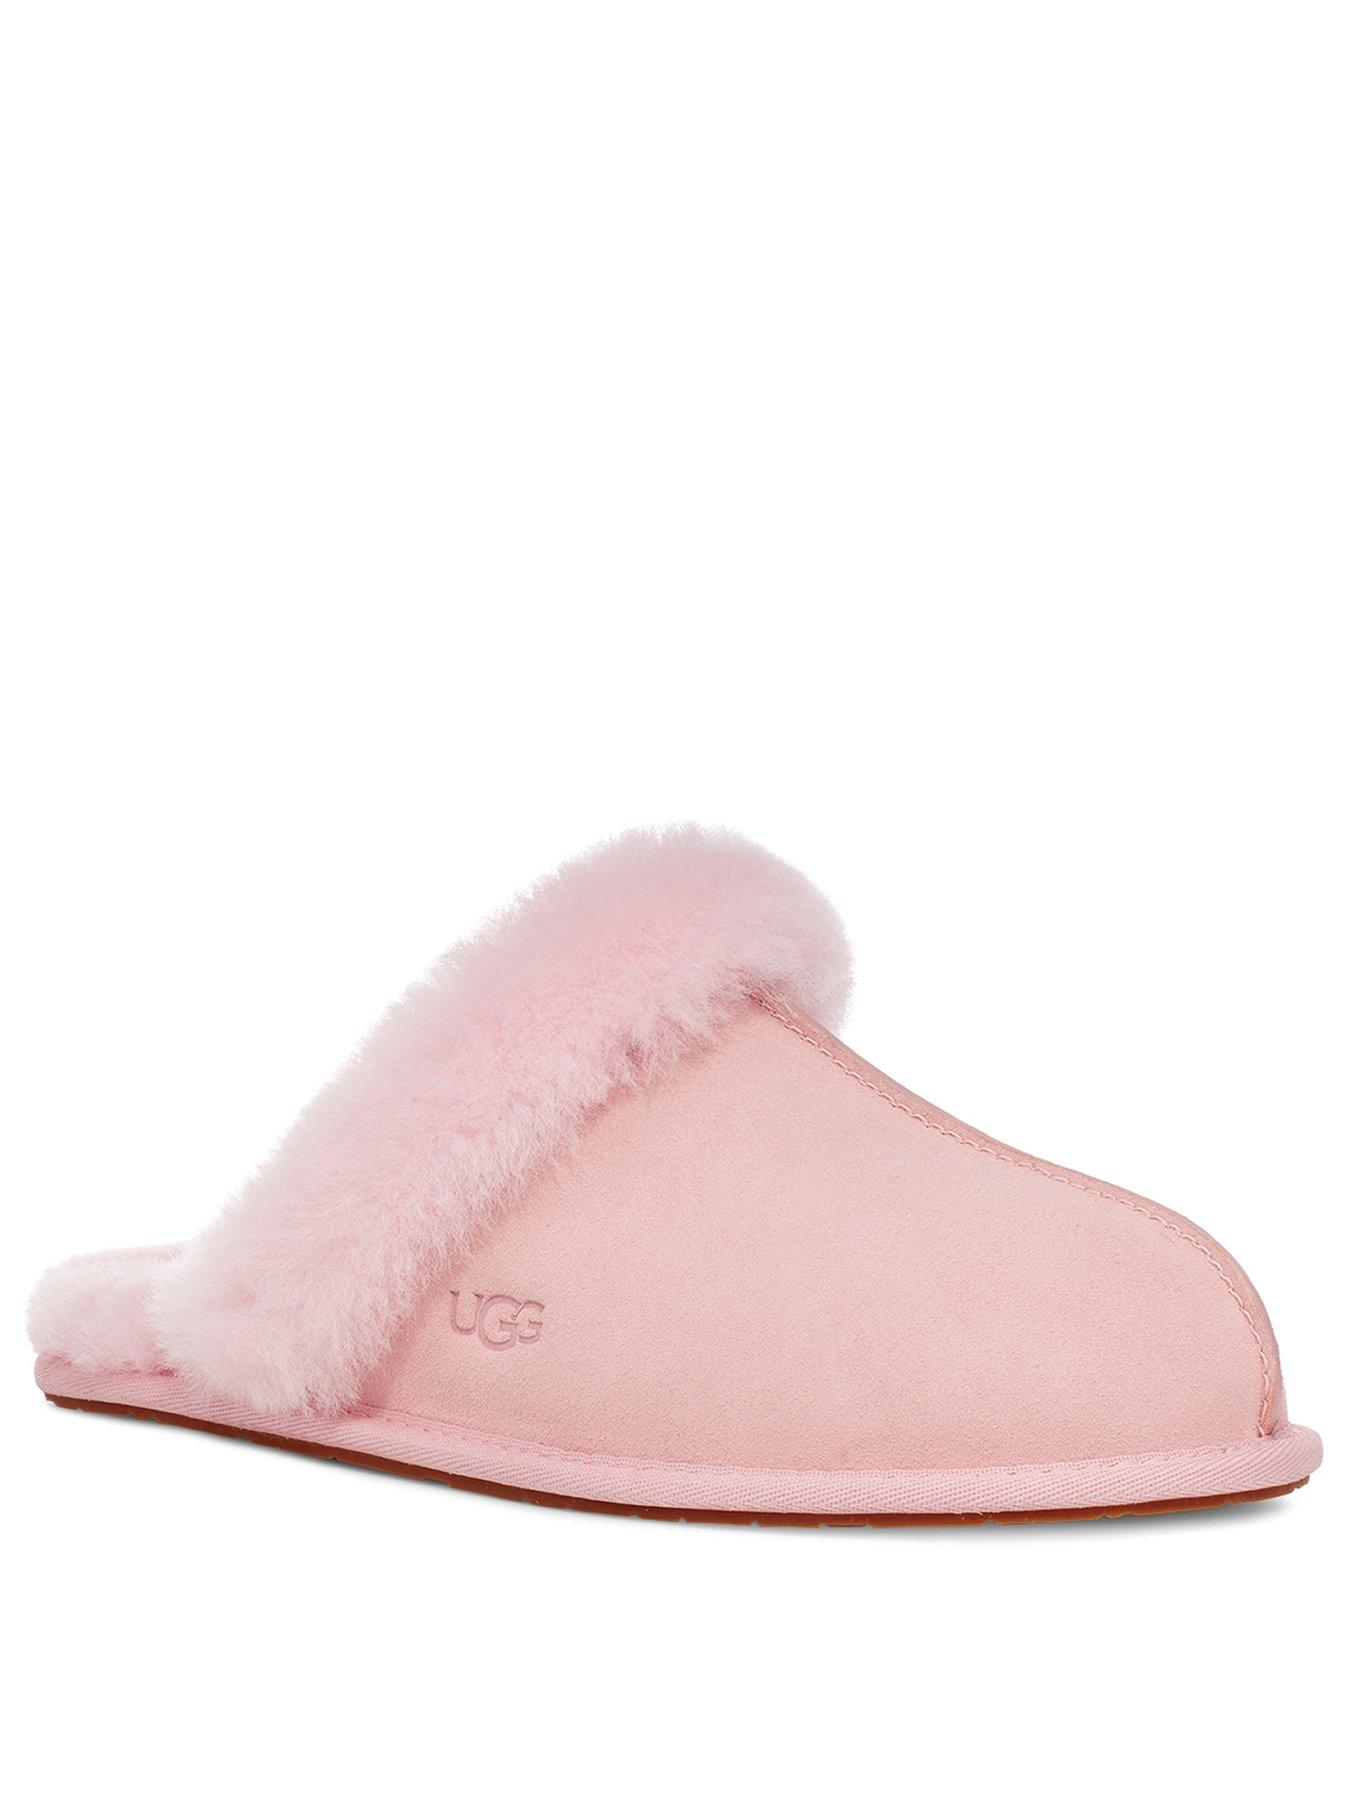 ugg scuffette ii slippers pink